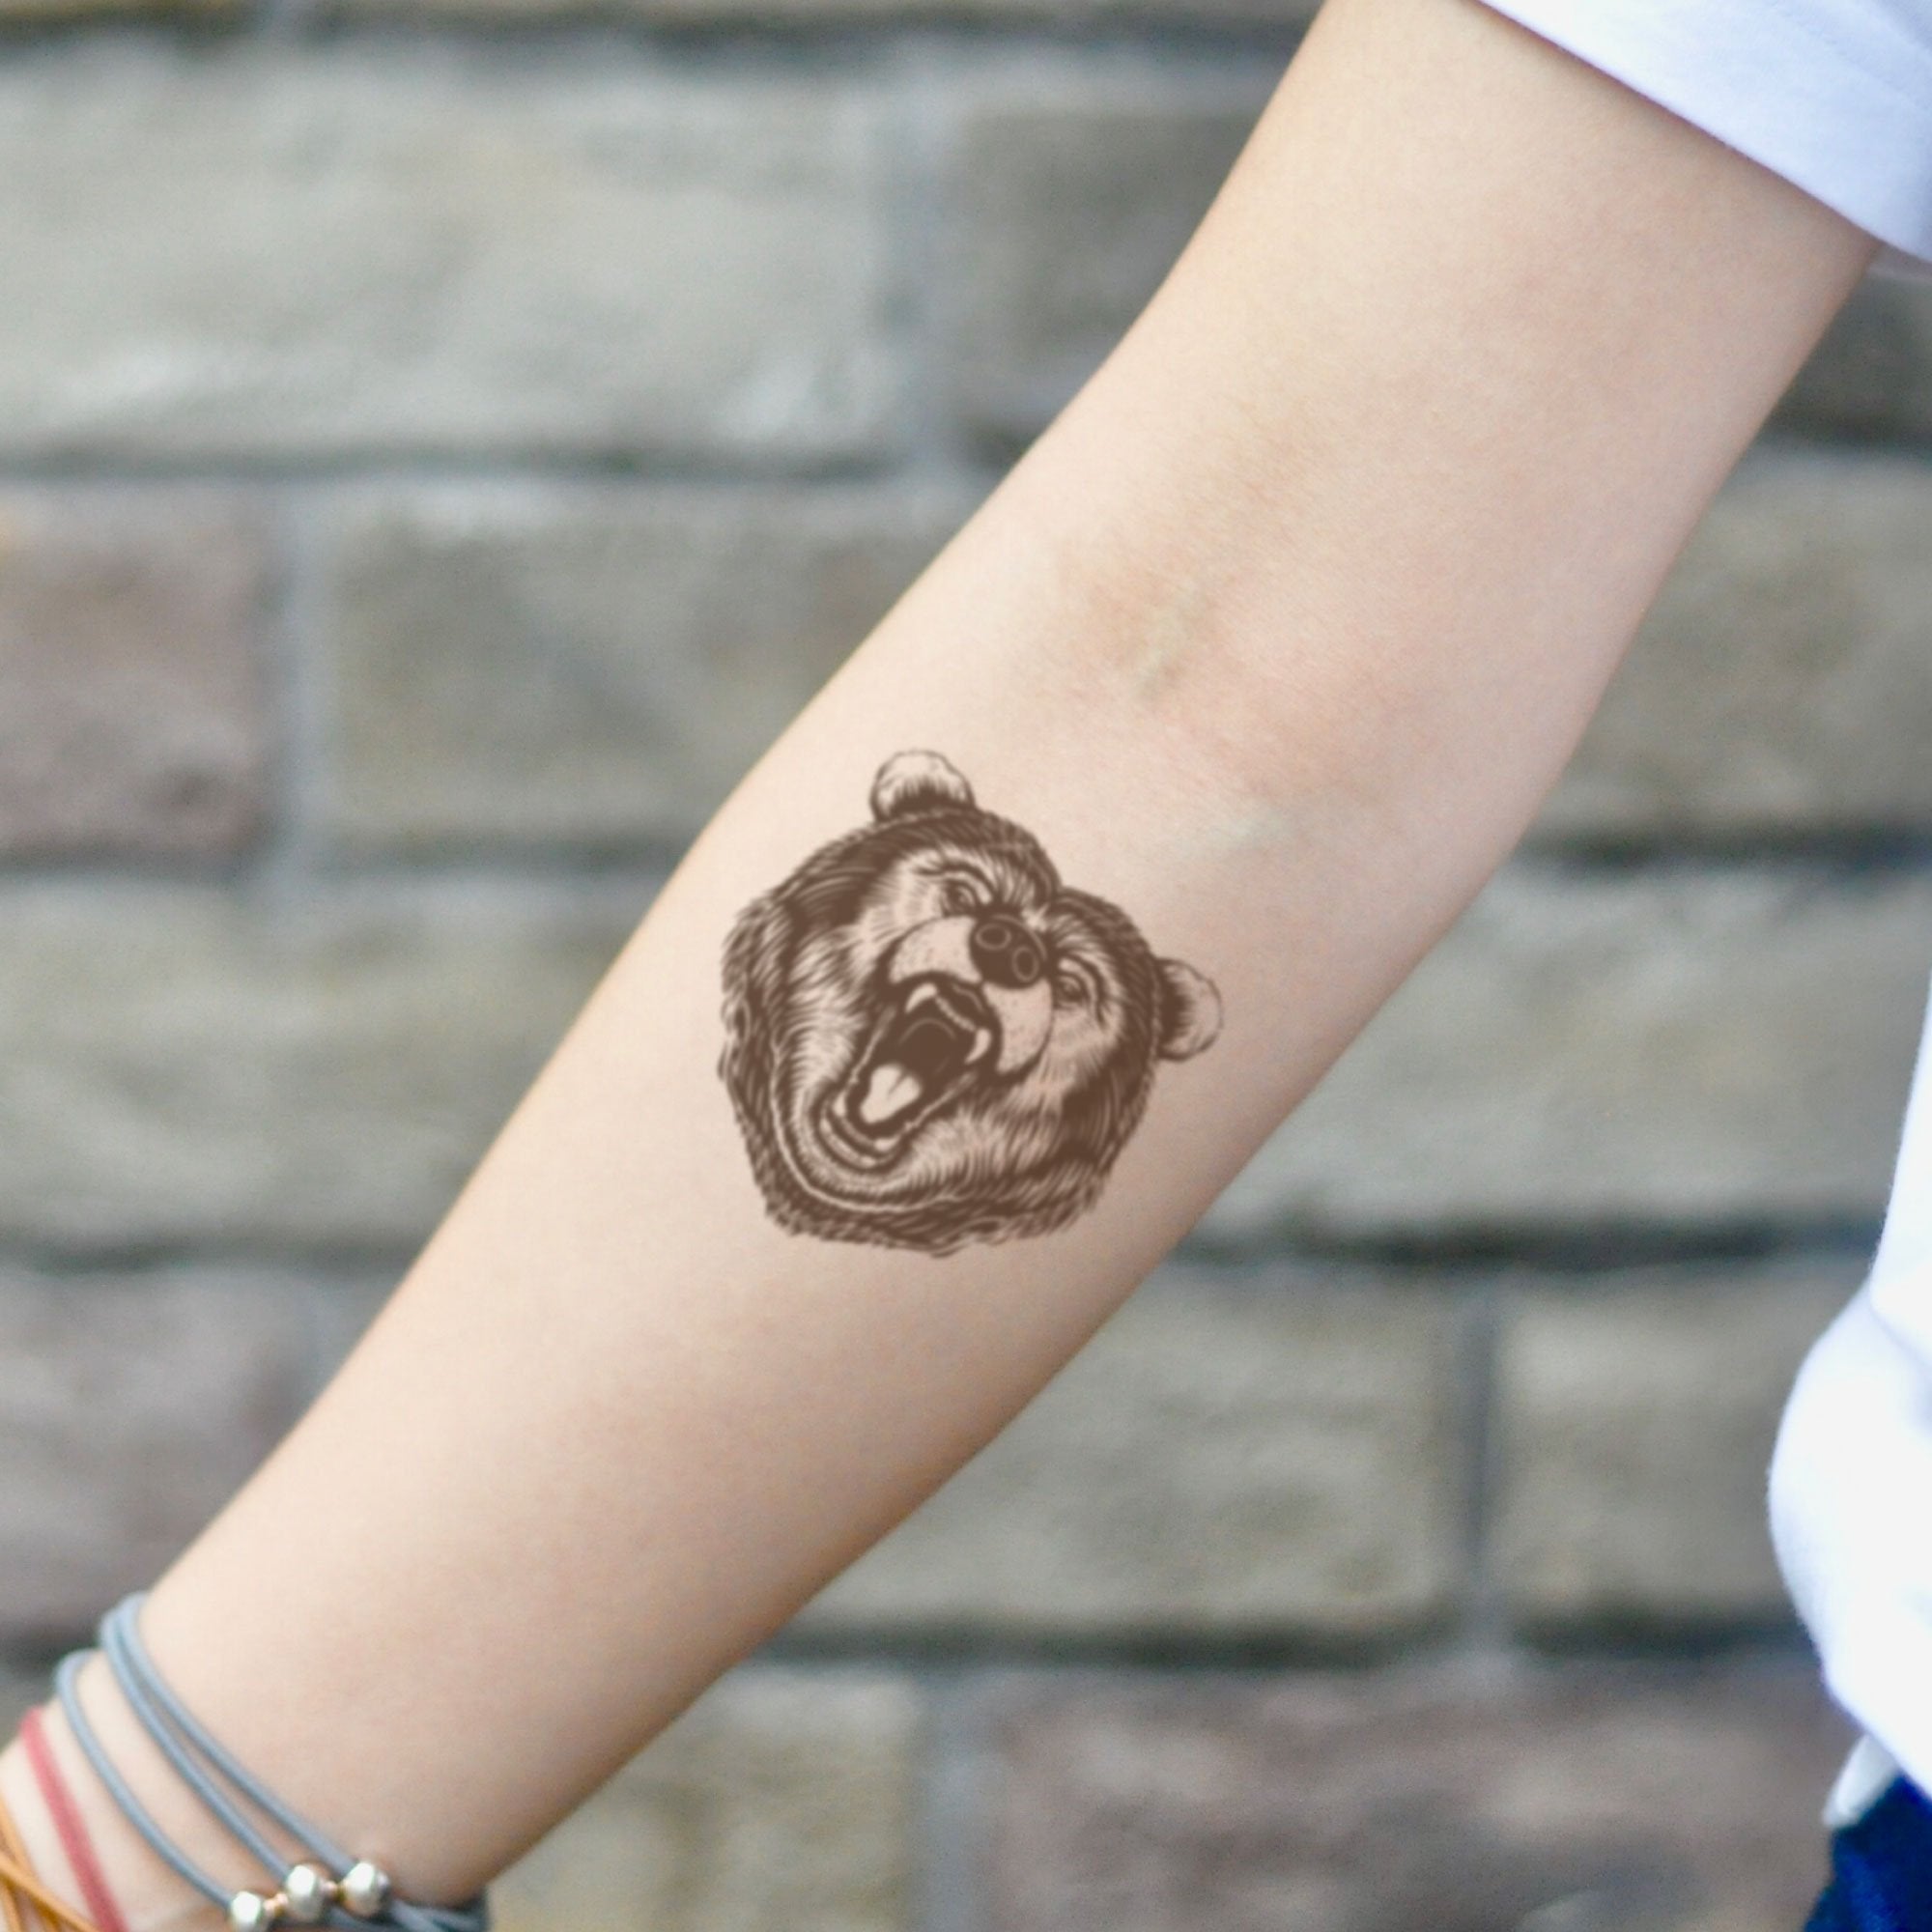 Orangutan Geometry Arm Fashion Temporary Tattoos For Men Women Feather Rose  Spartan Fake Tattoo Body Art Decoration Tatoos Paper  Temporary Tattoos   AliExpress